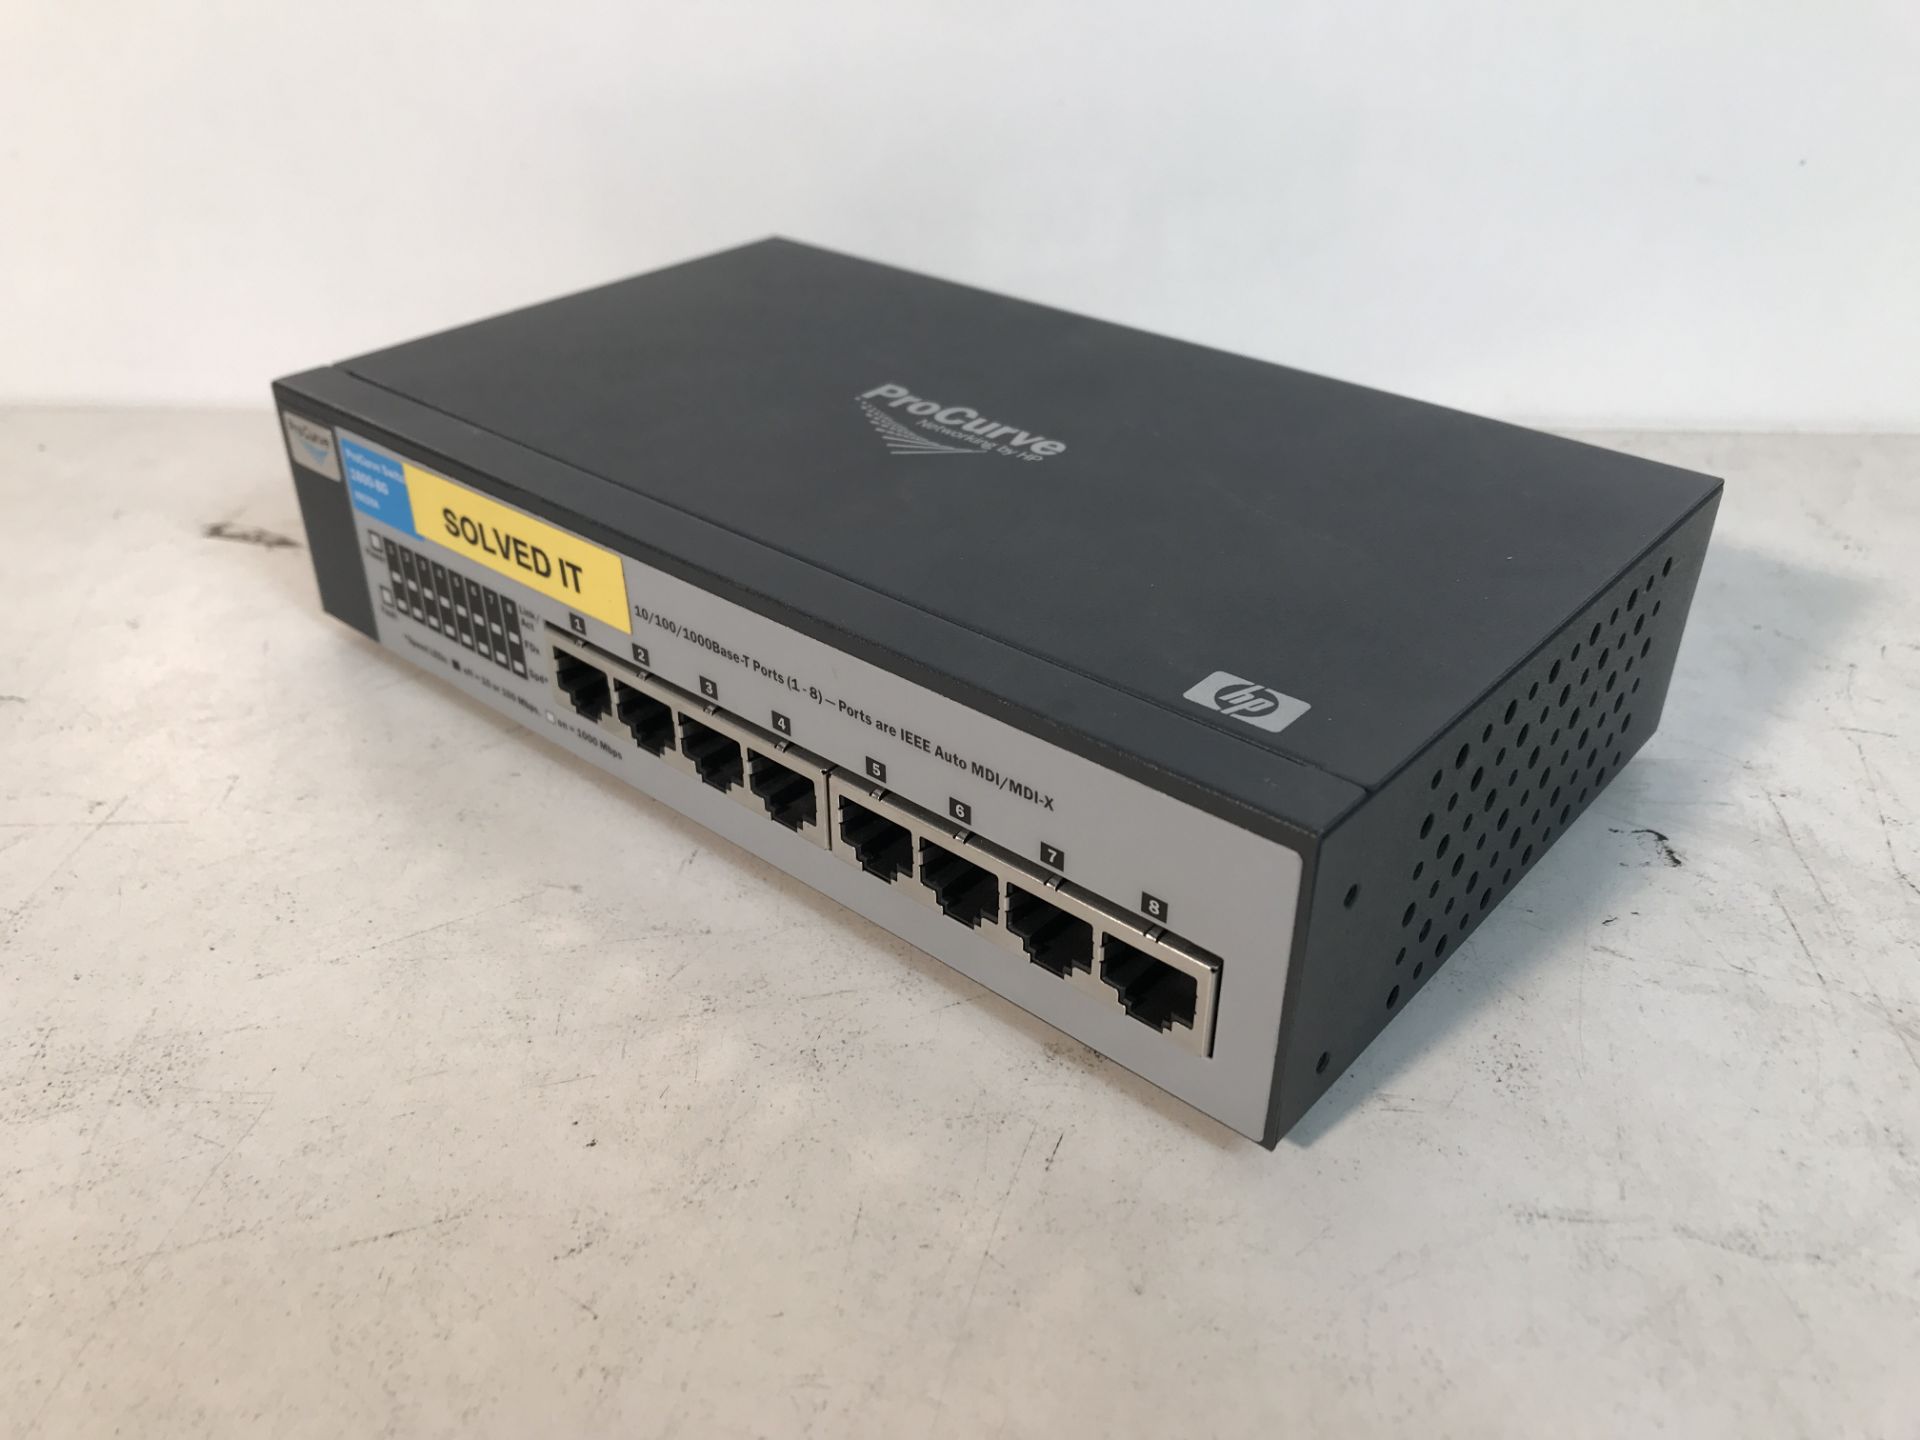 HP Procurve 8 Port Network Switch - Image 2 of 4